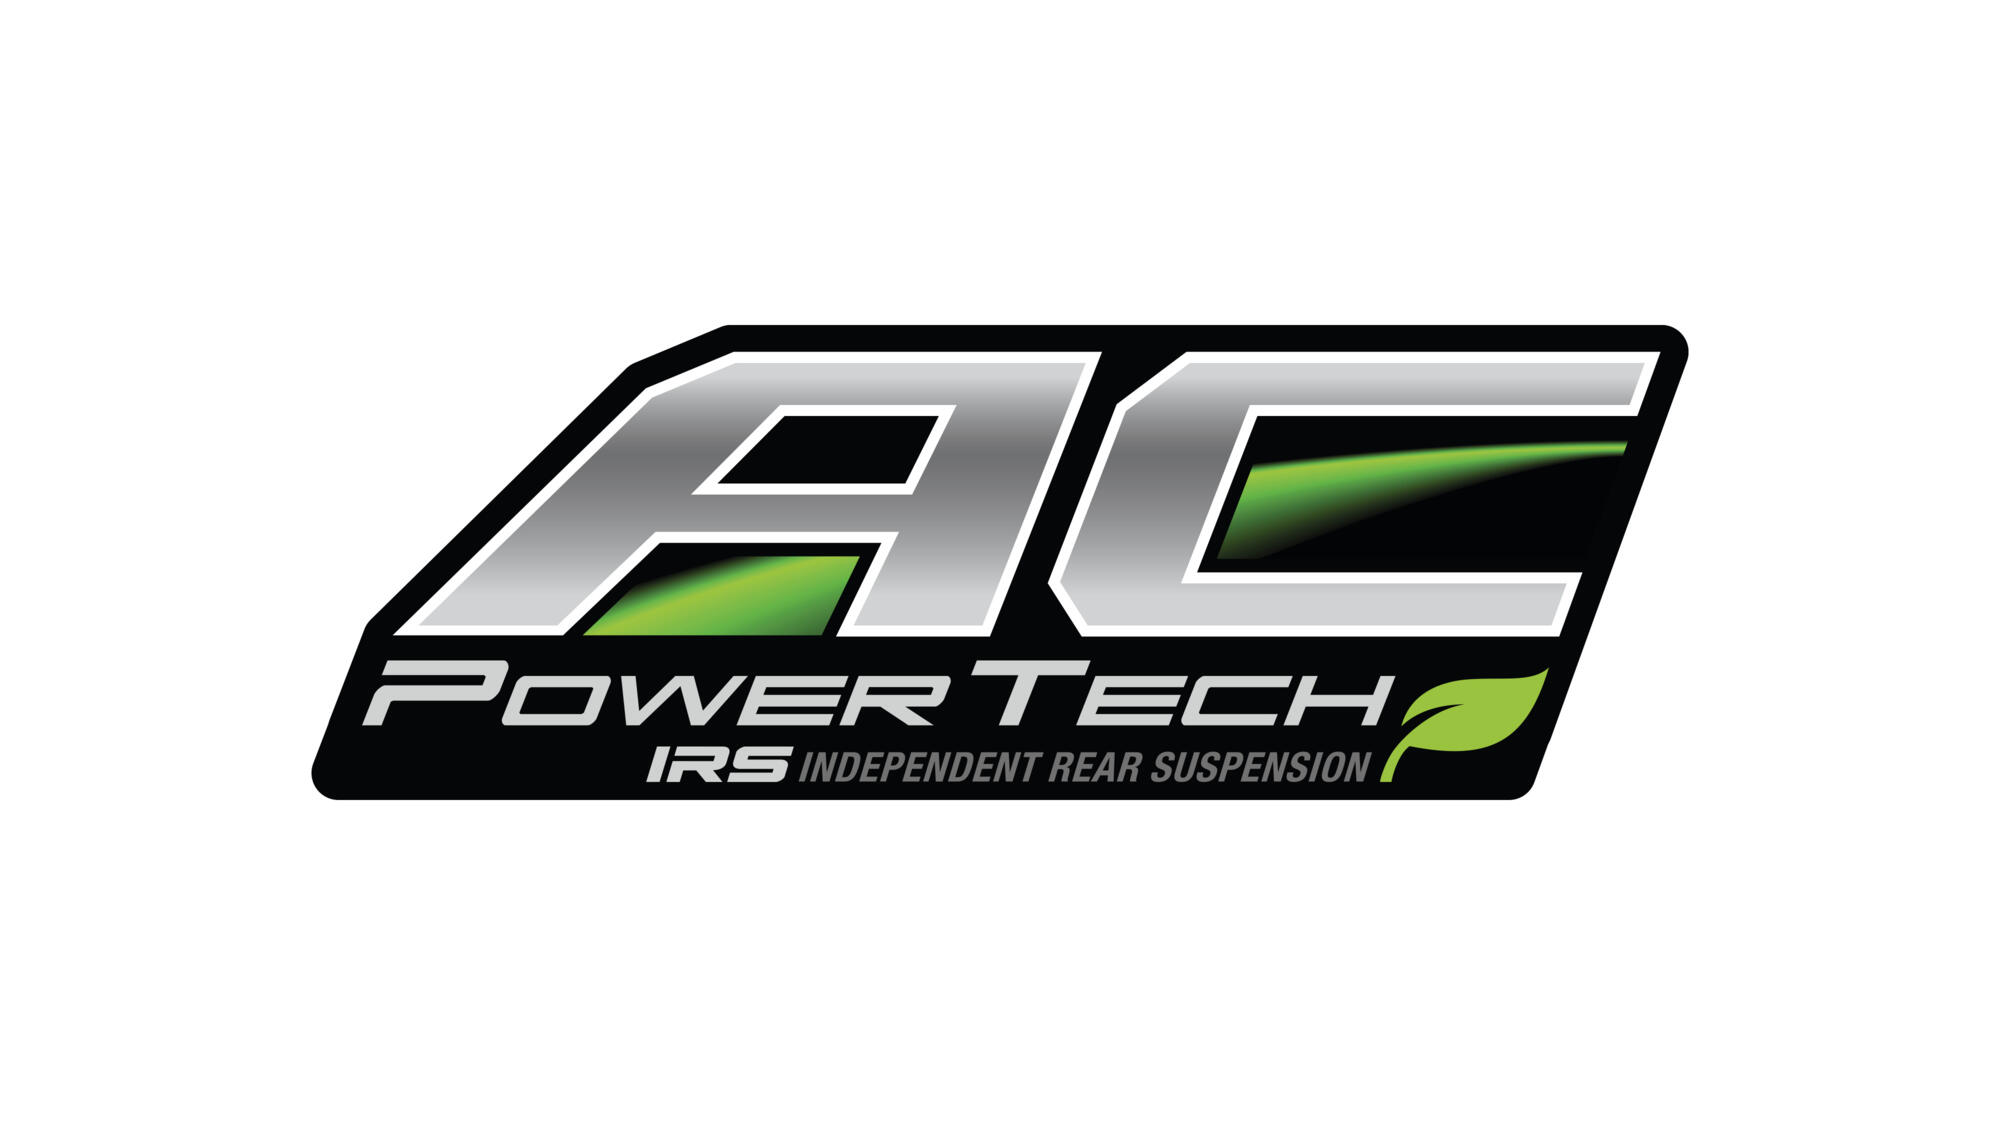 Drive² PowerTech AC AGM 5.0 kW electric motor